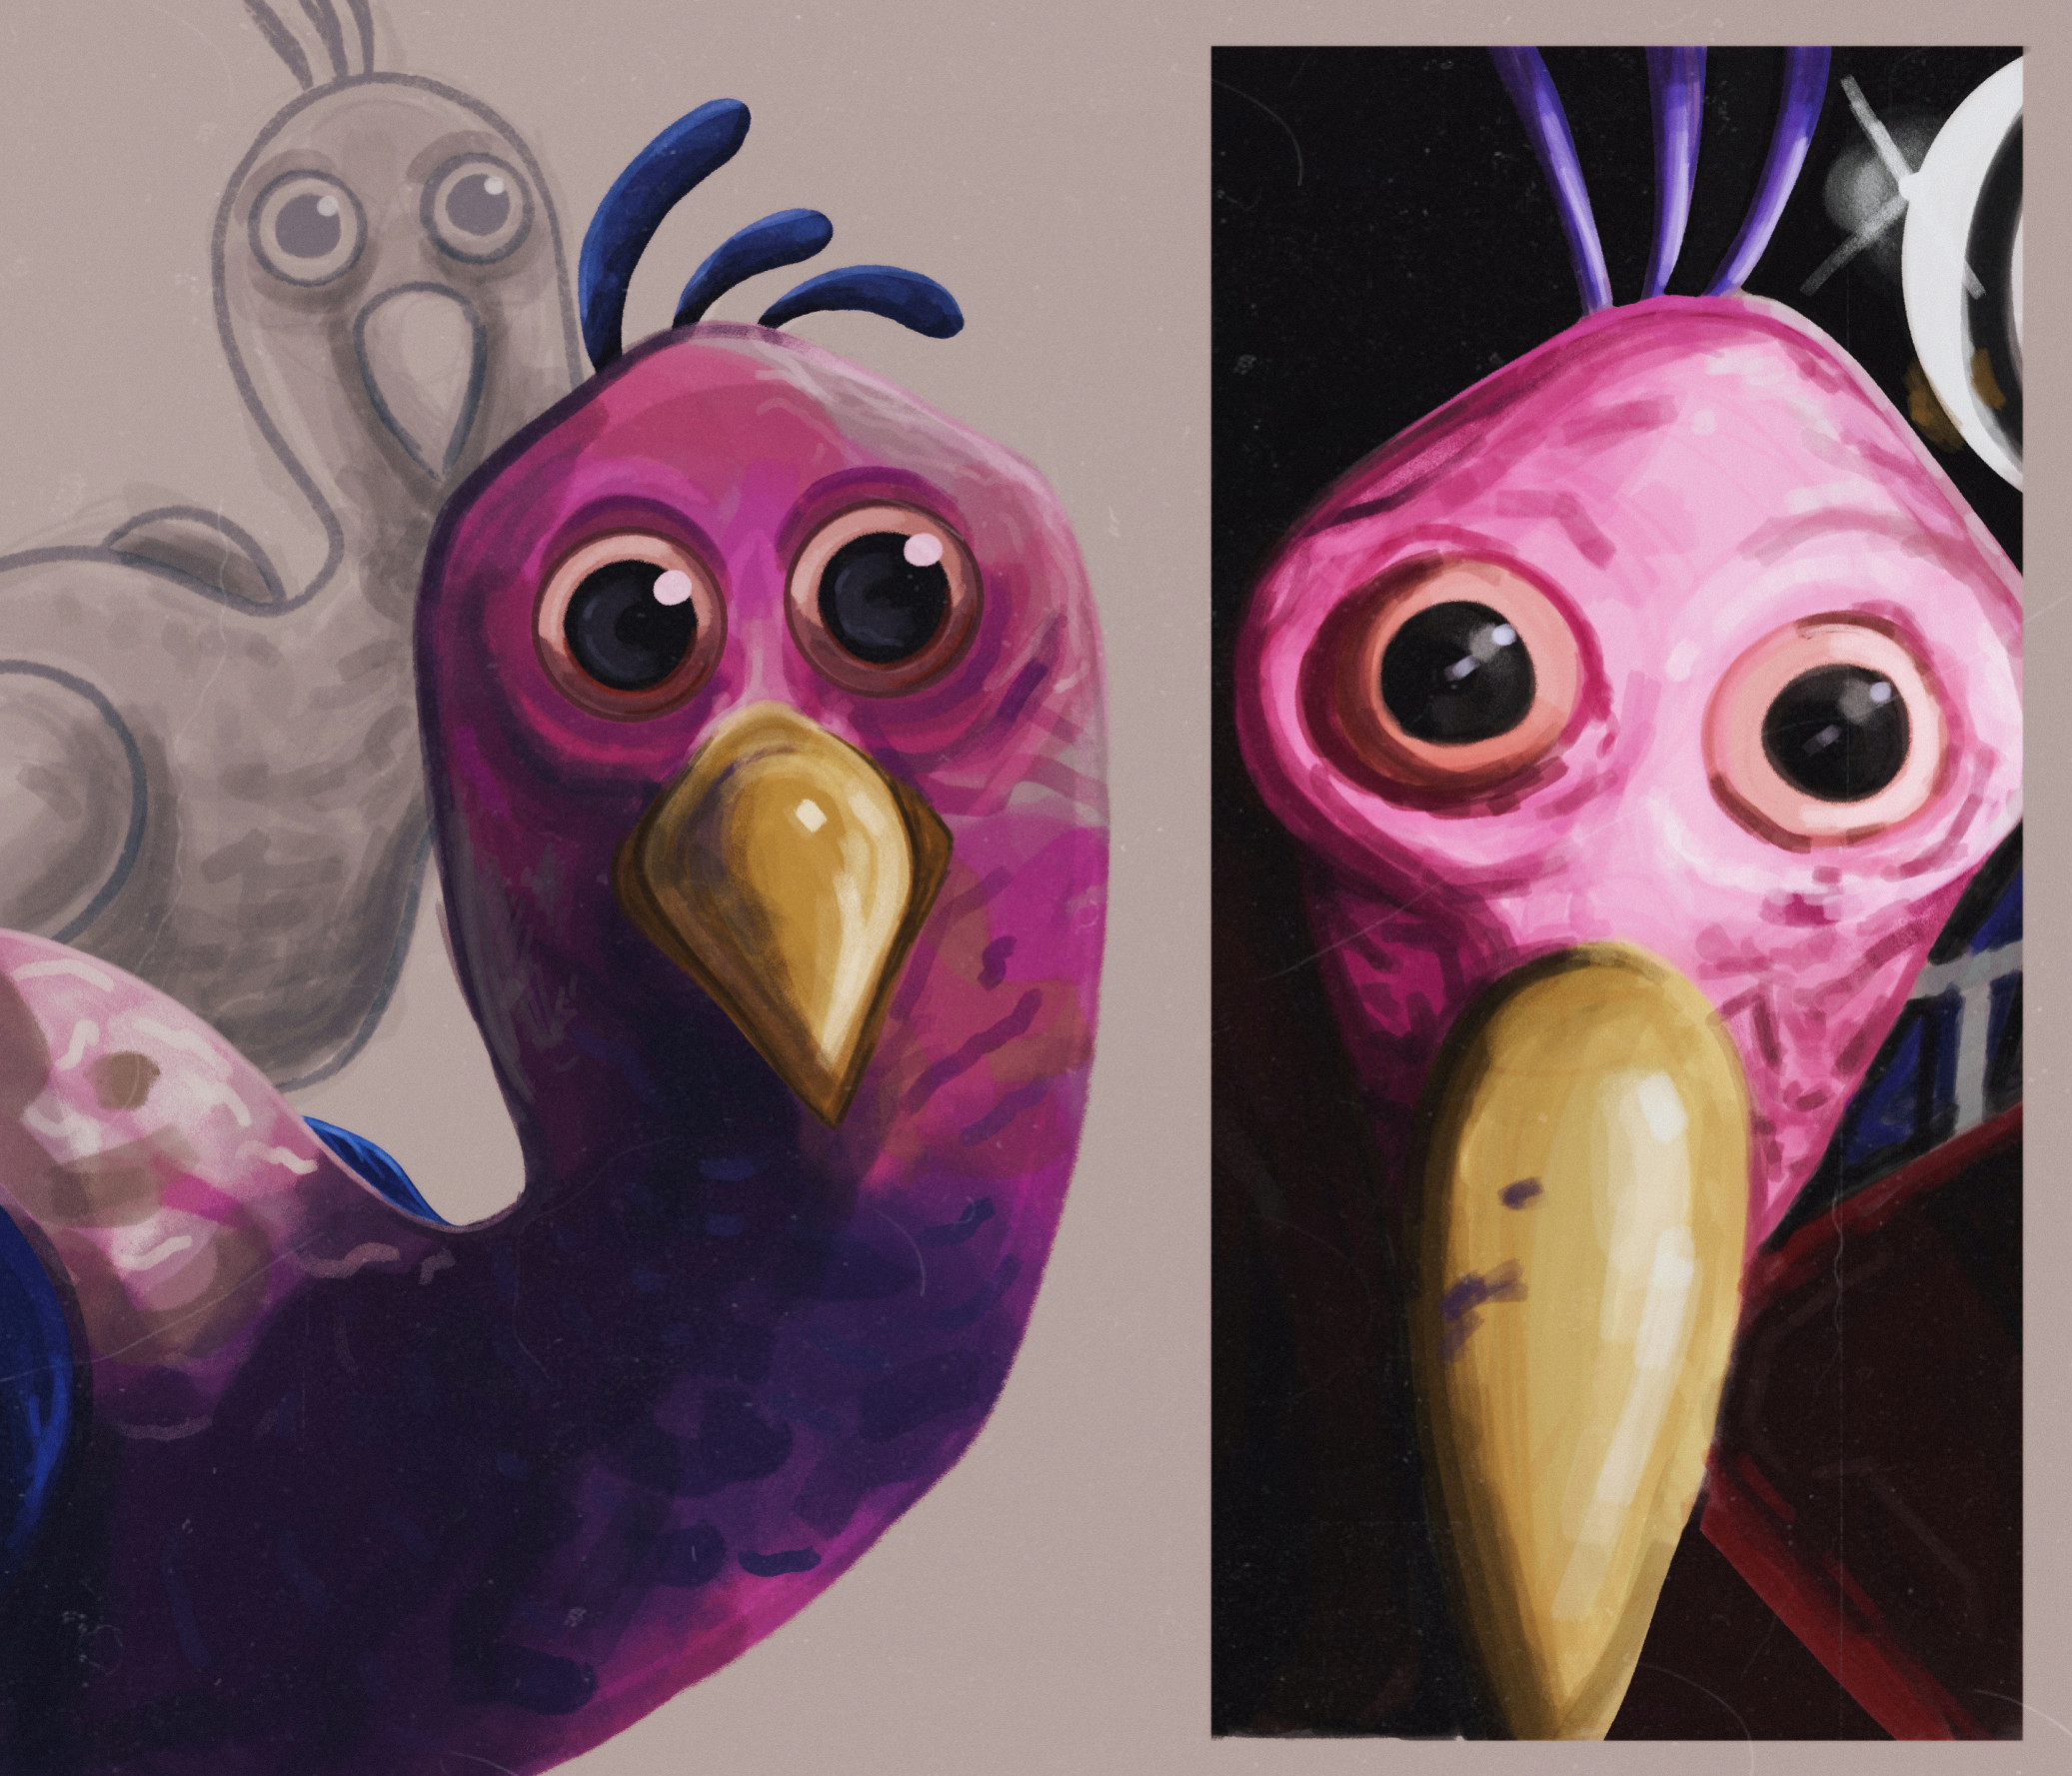 Opila Bird Sketches by Pidgequill -- Fur Affinity [dot] net